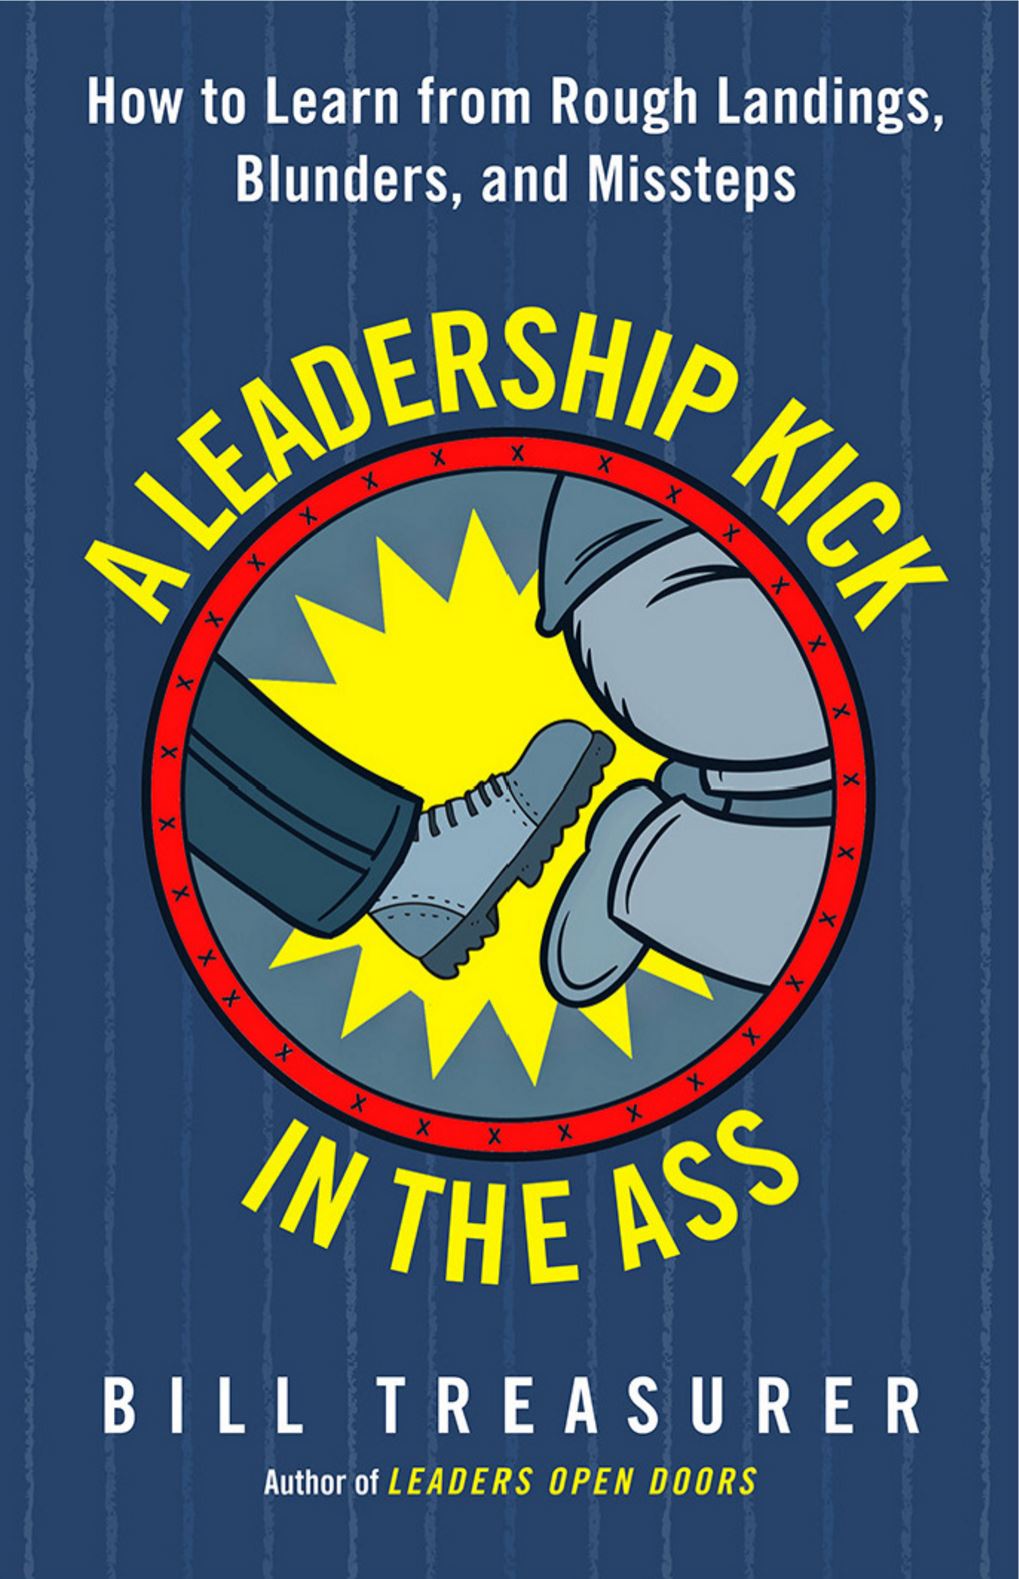 Bill Treasurer's latest book, "A Leadership Kick in the Ass"